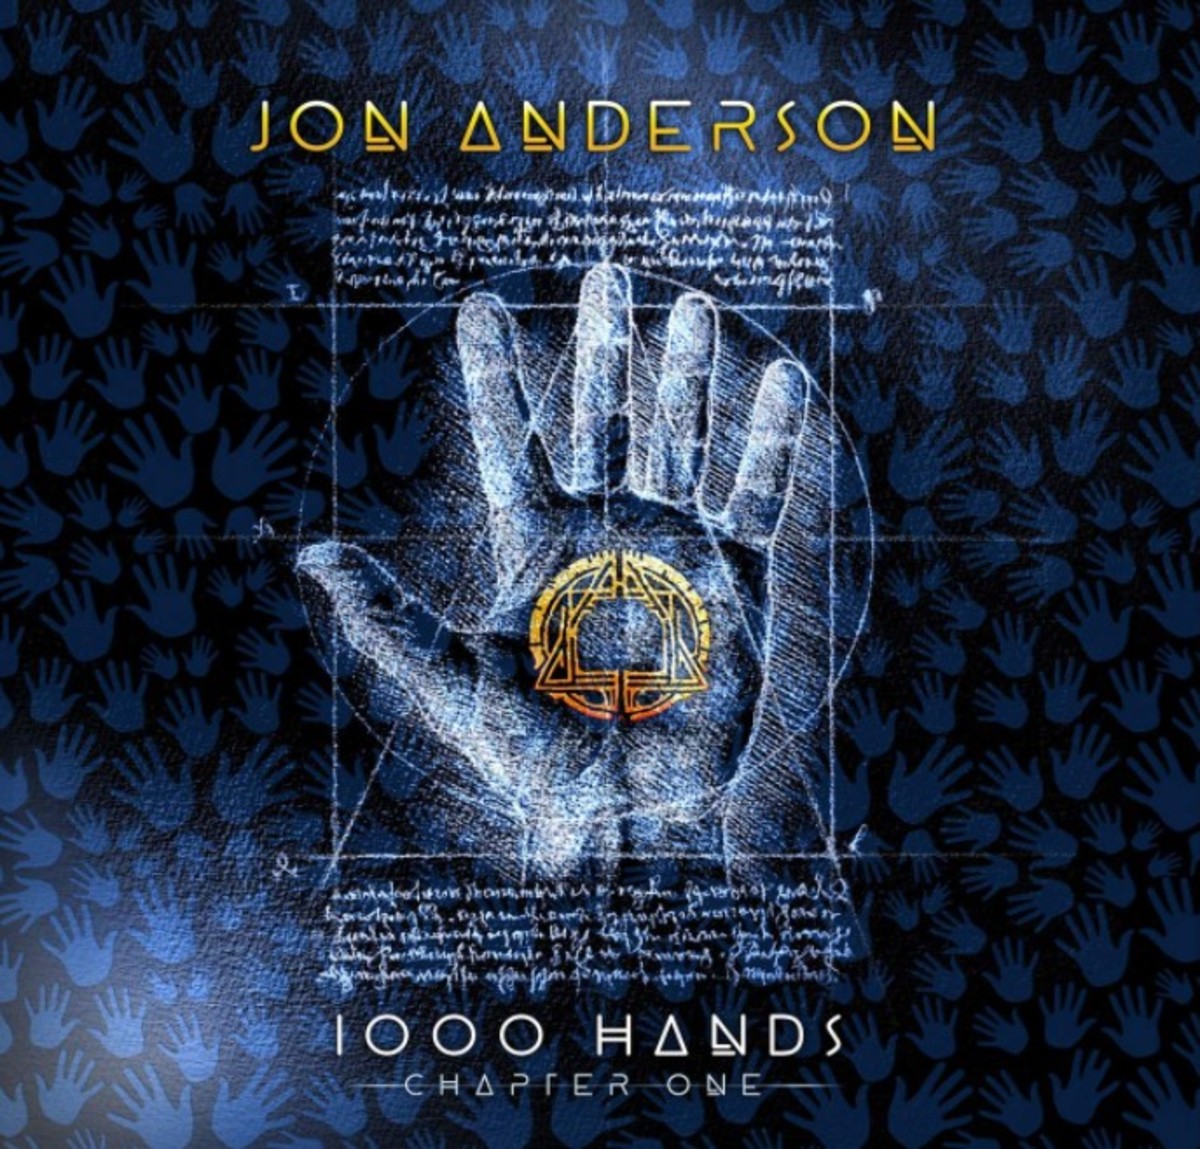 Jon Anderson 1000